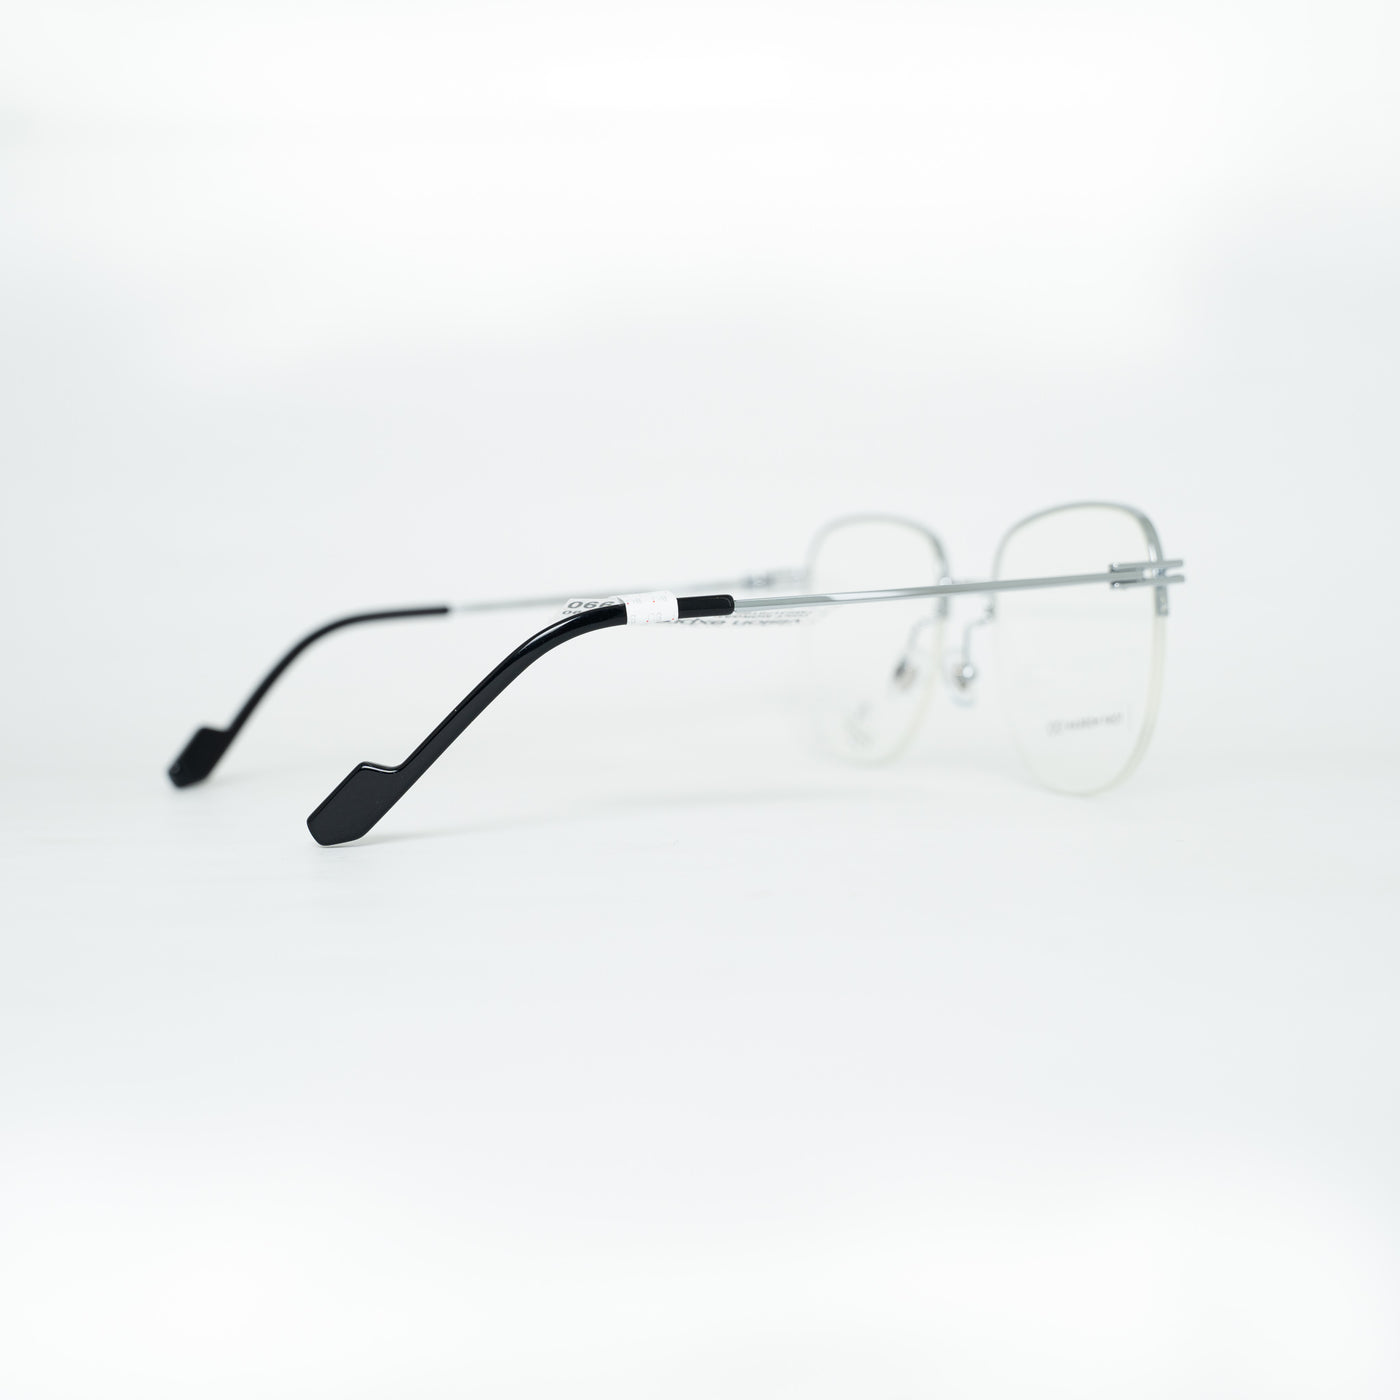 Tony Morgan TMS31751SILVER56 | Eyeglasses - Vision Express Optical Philippines